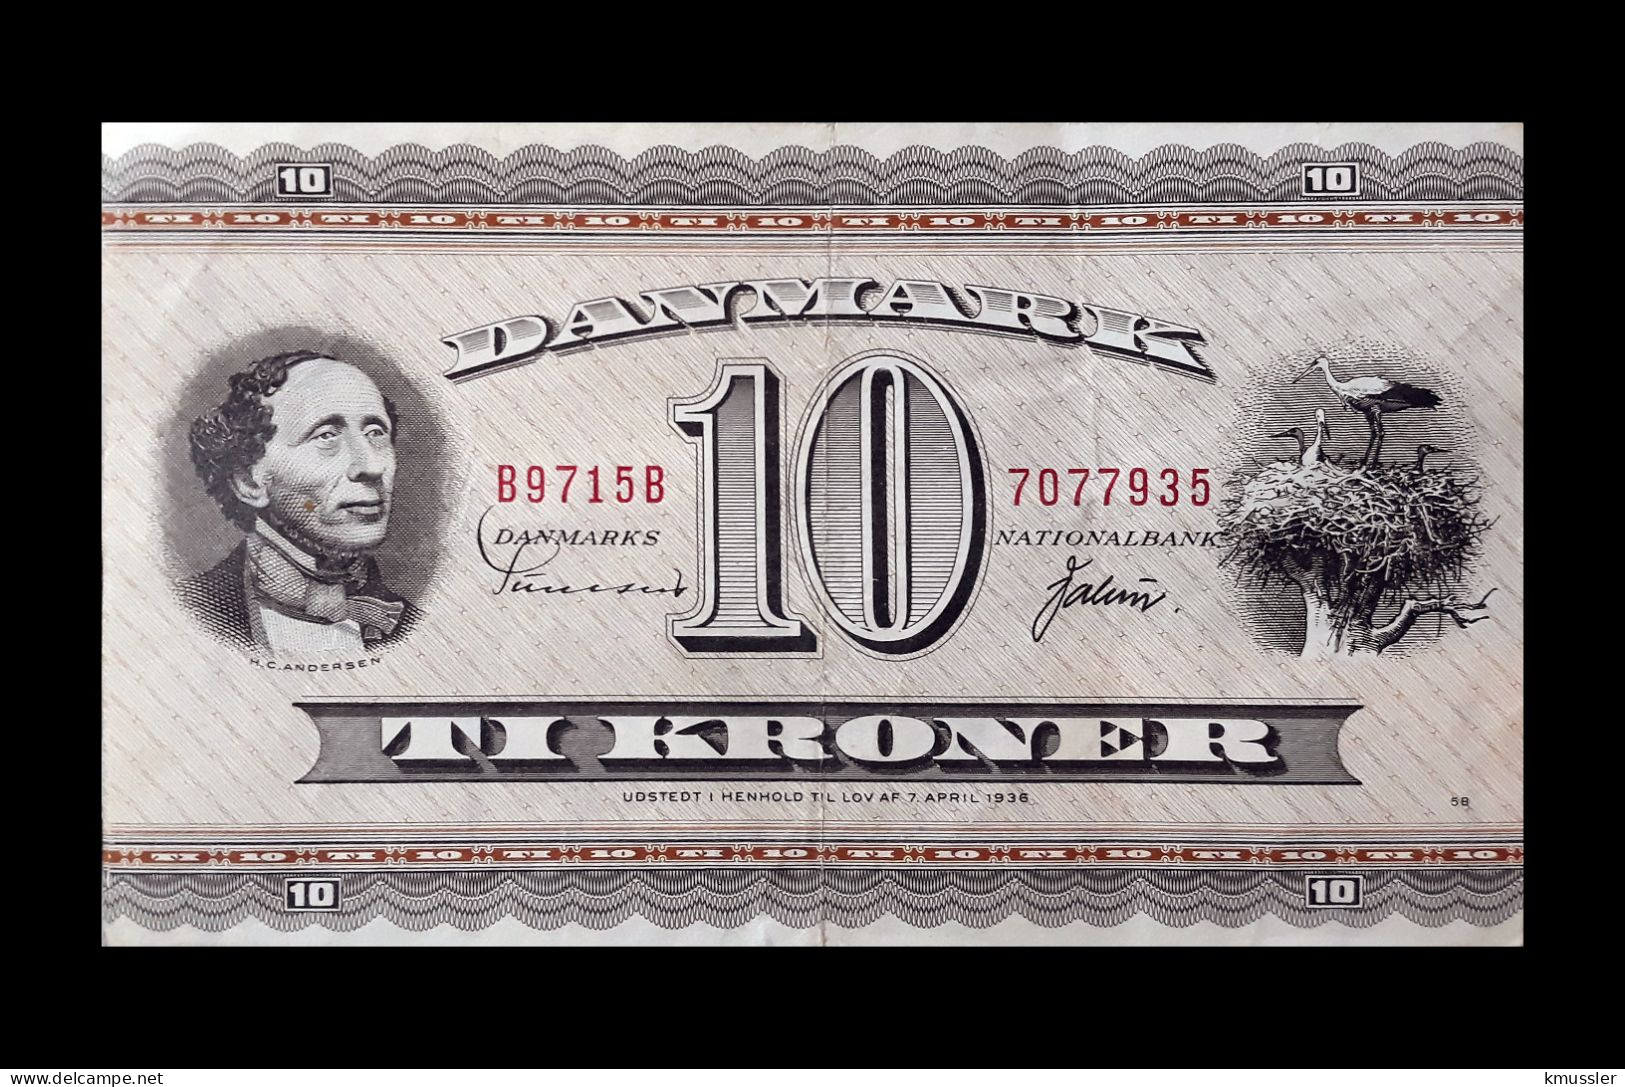 # # # Banknote Dänemark (Denmark) 10 Kroner 1936 # # # - Denemarken